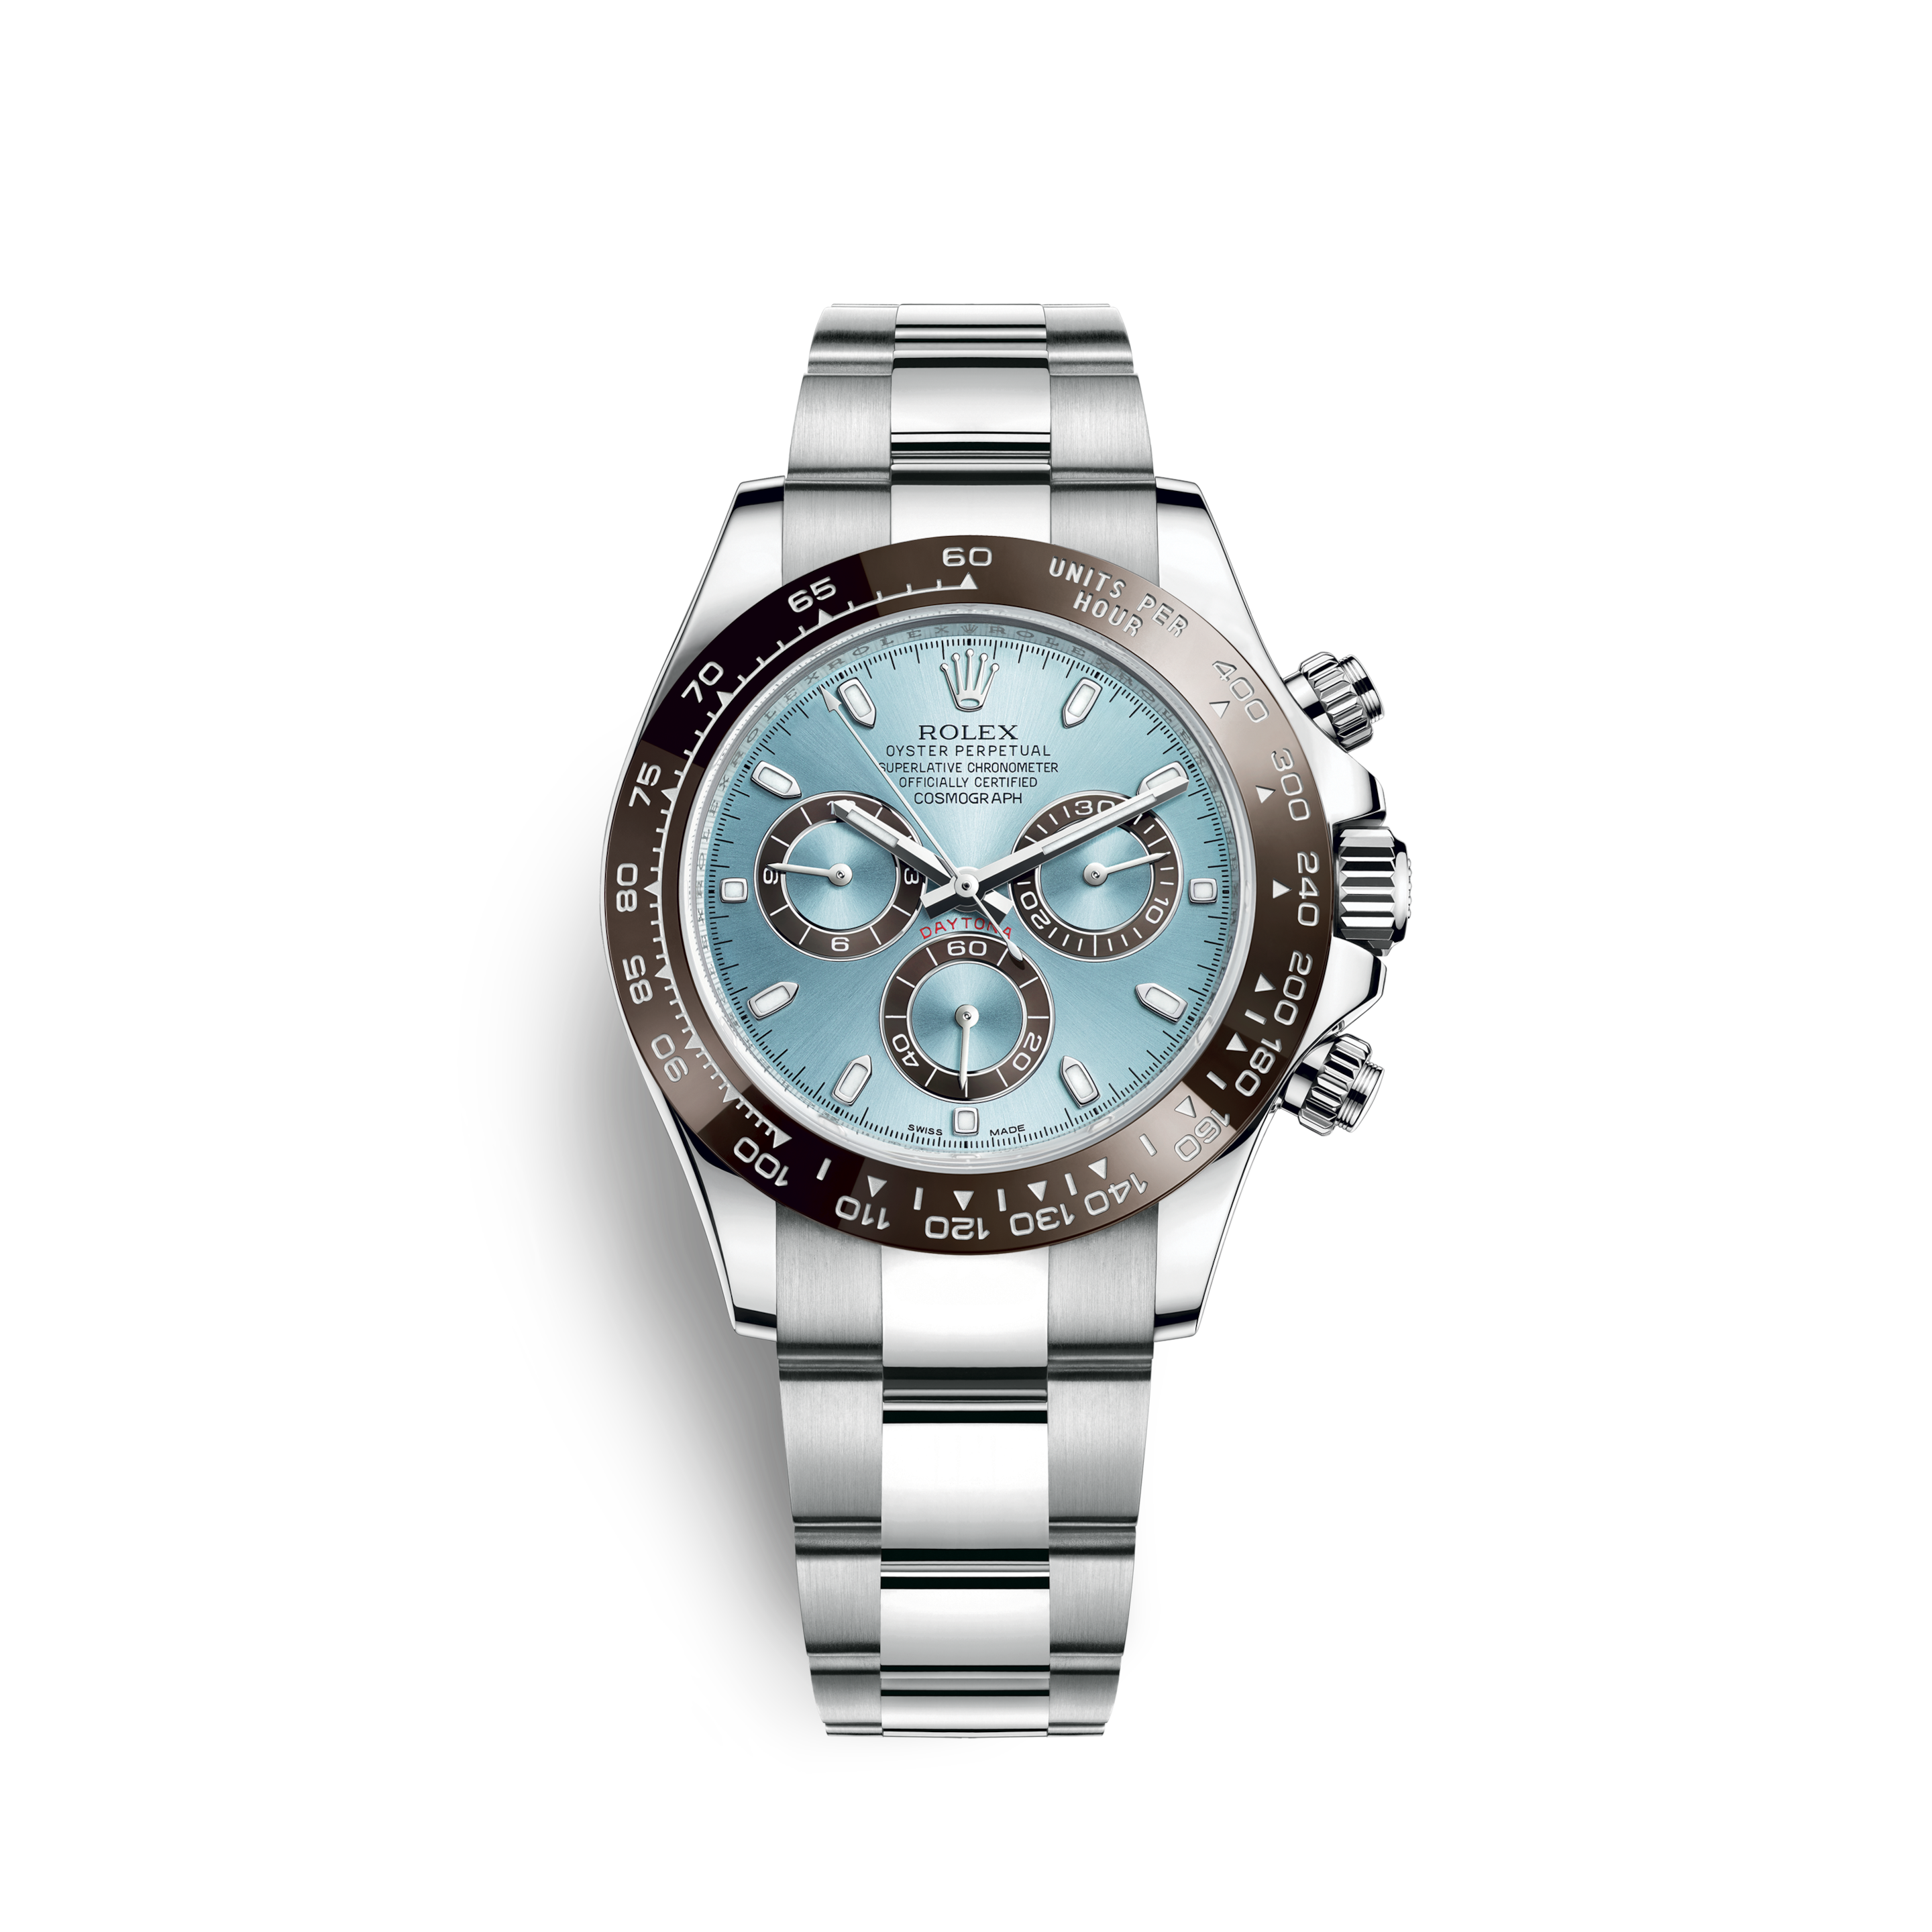 Rolex Cosmograph Daytona - A Watch Born 